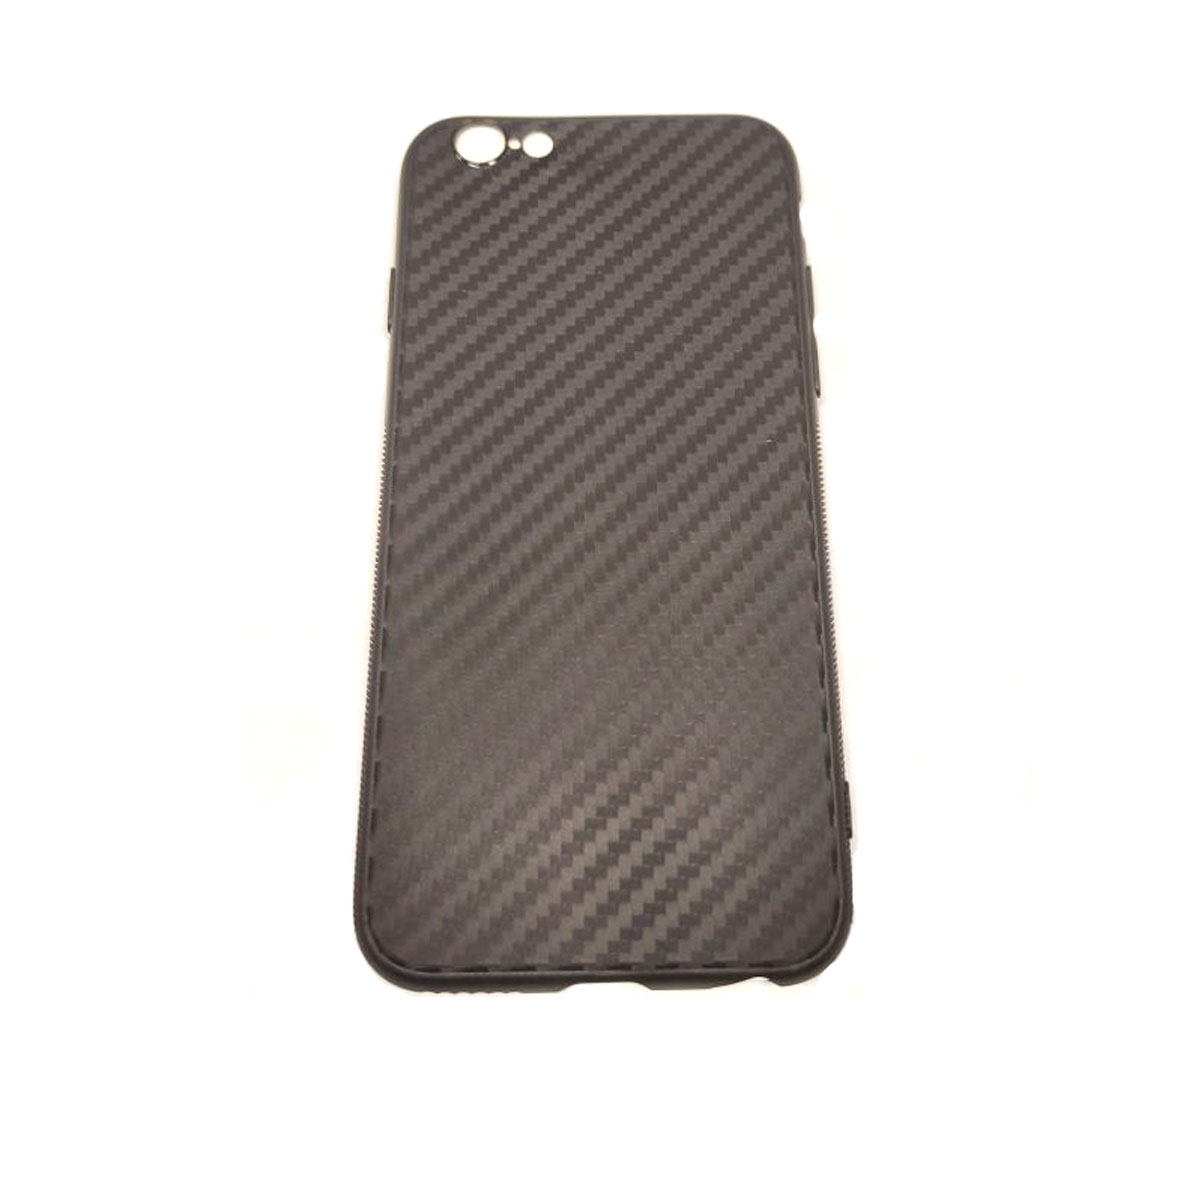 Чехол накладка для APPLE iPhone 6, iPhone 6G, iPhone 6S, силикон, карбон, цвет черный